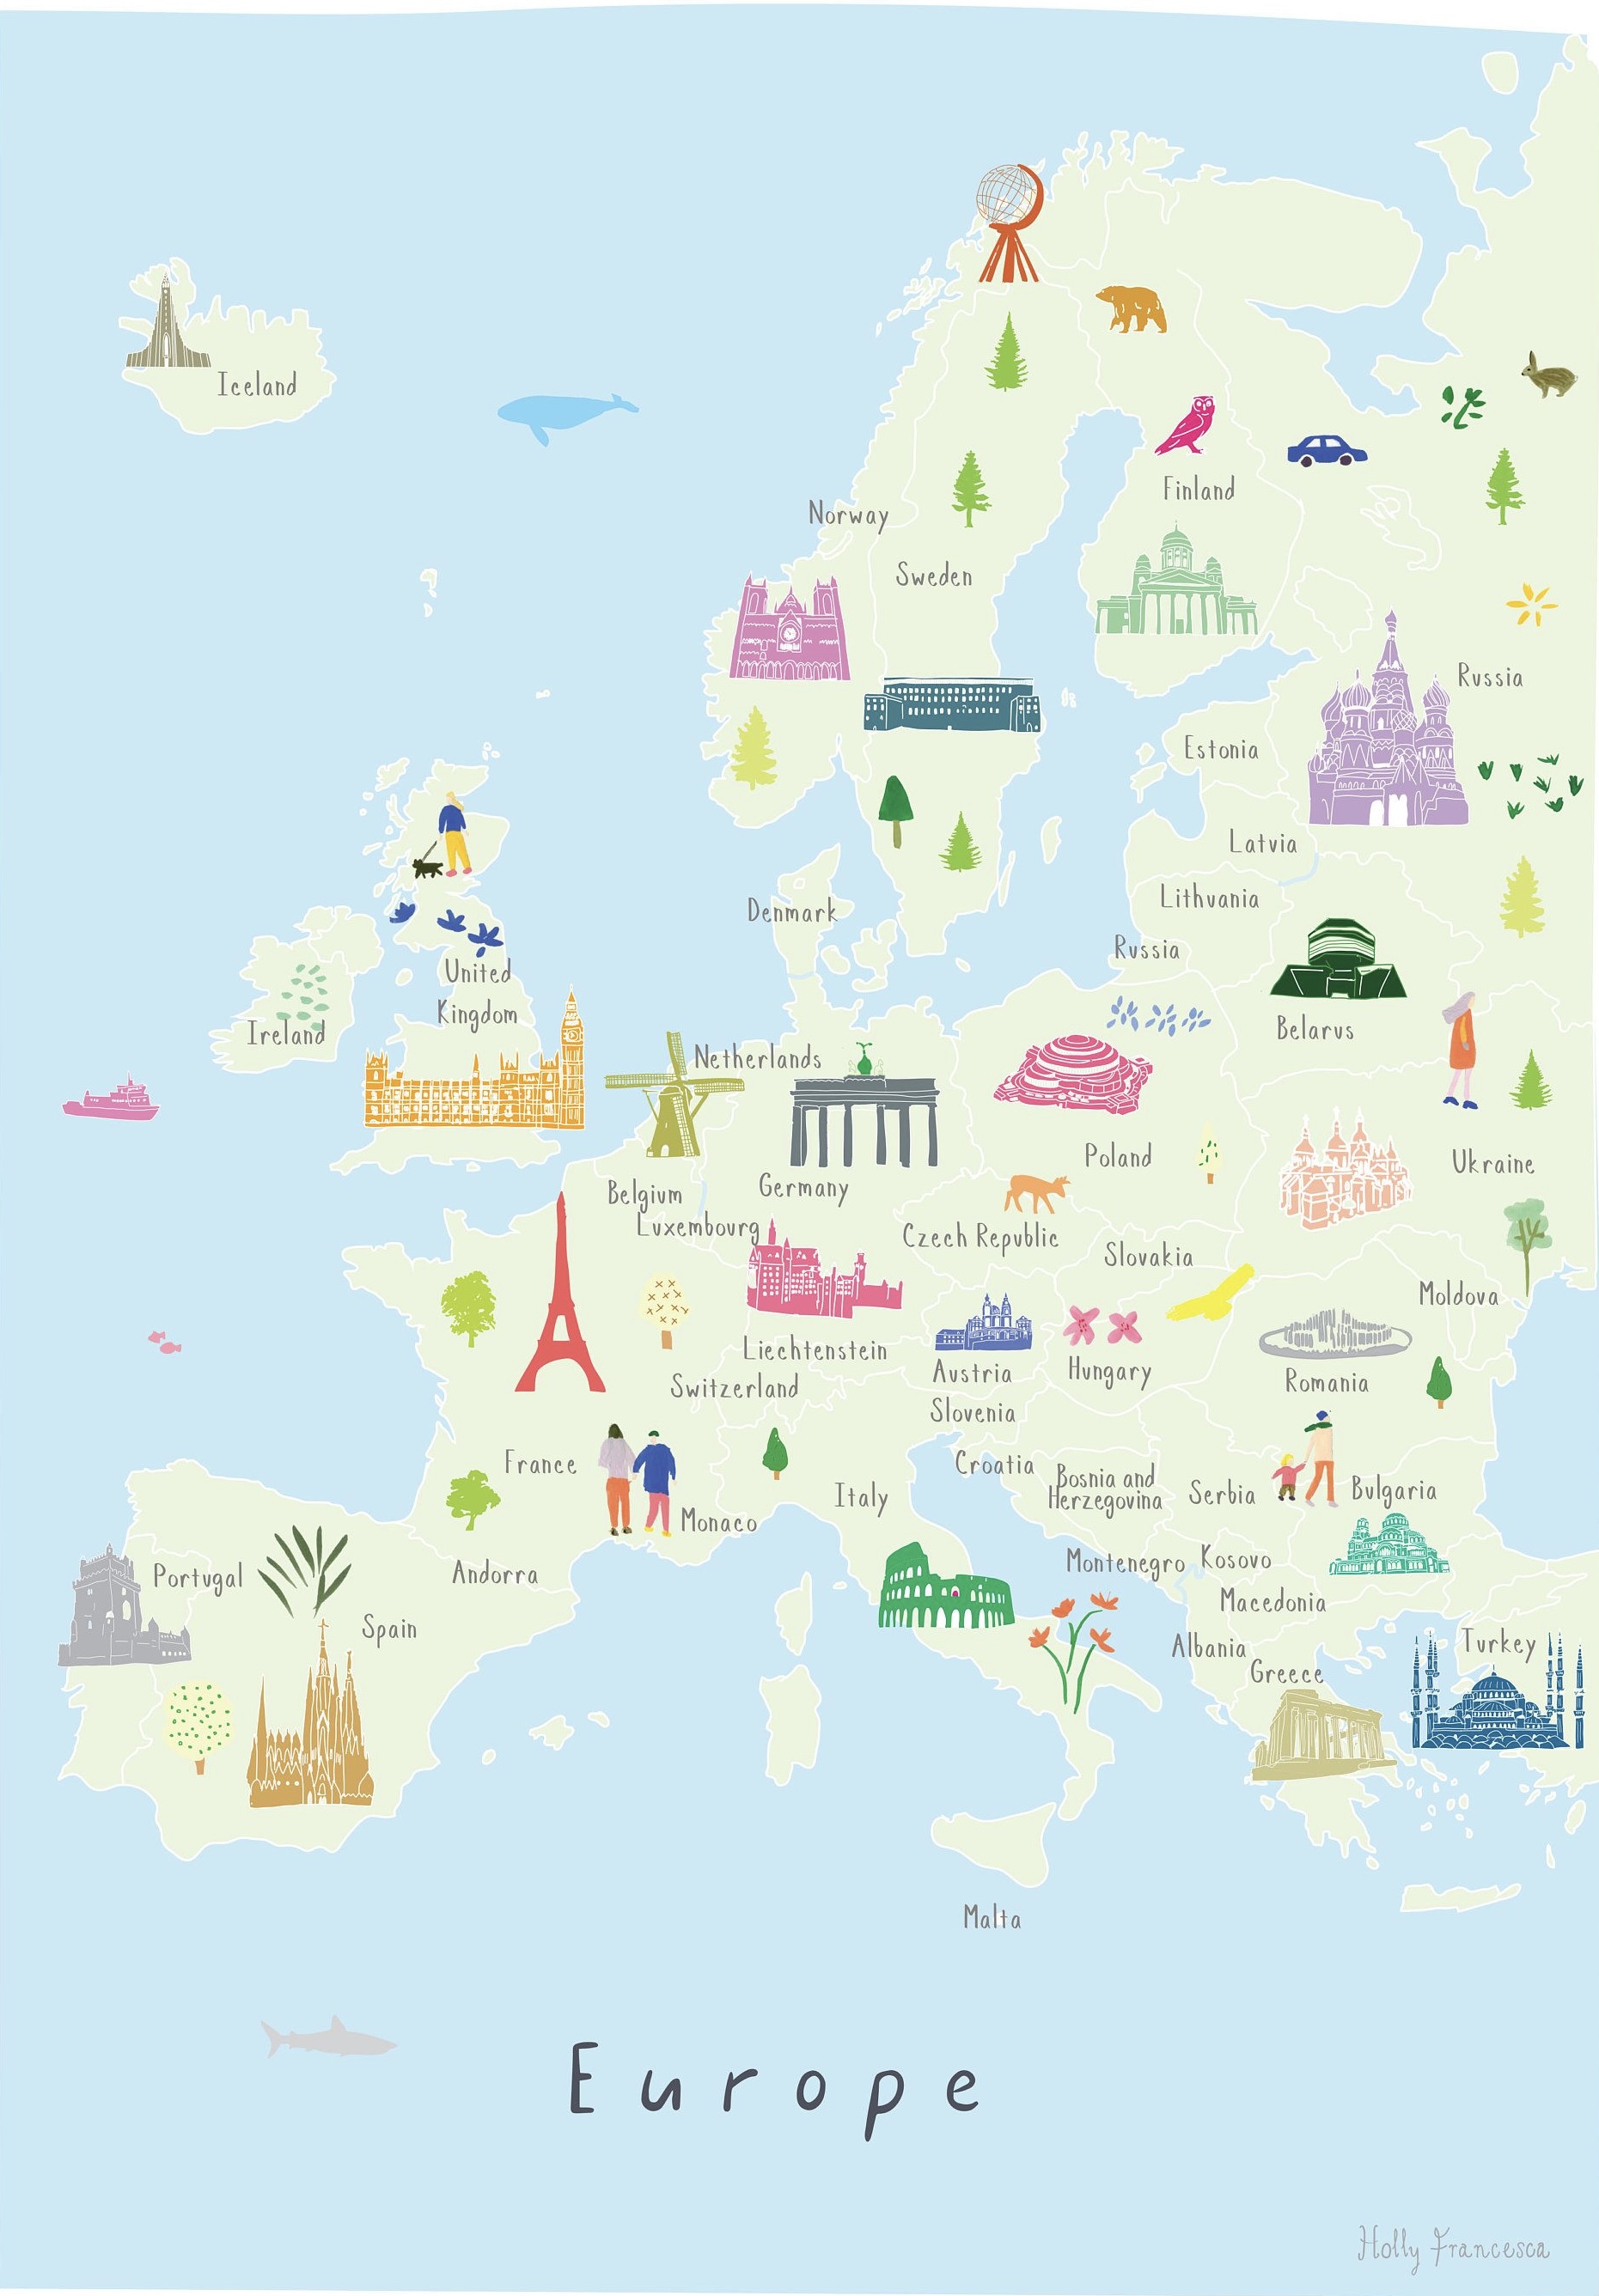 Mapa ilustrado by Holly Francesca (de Pinterest)